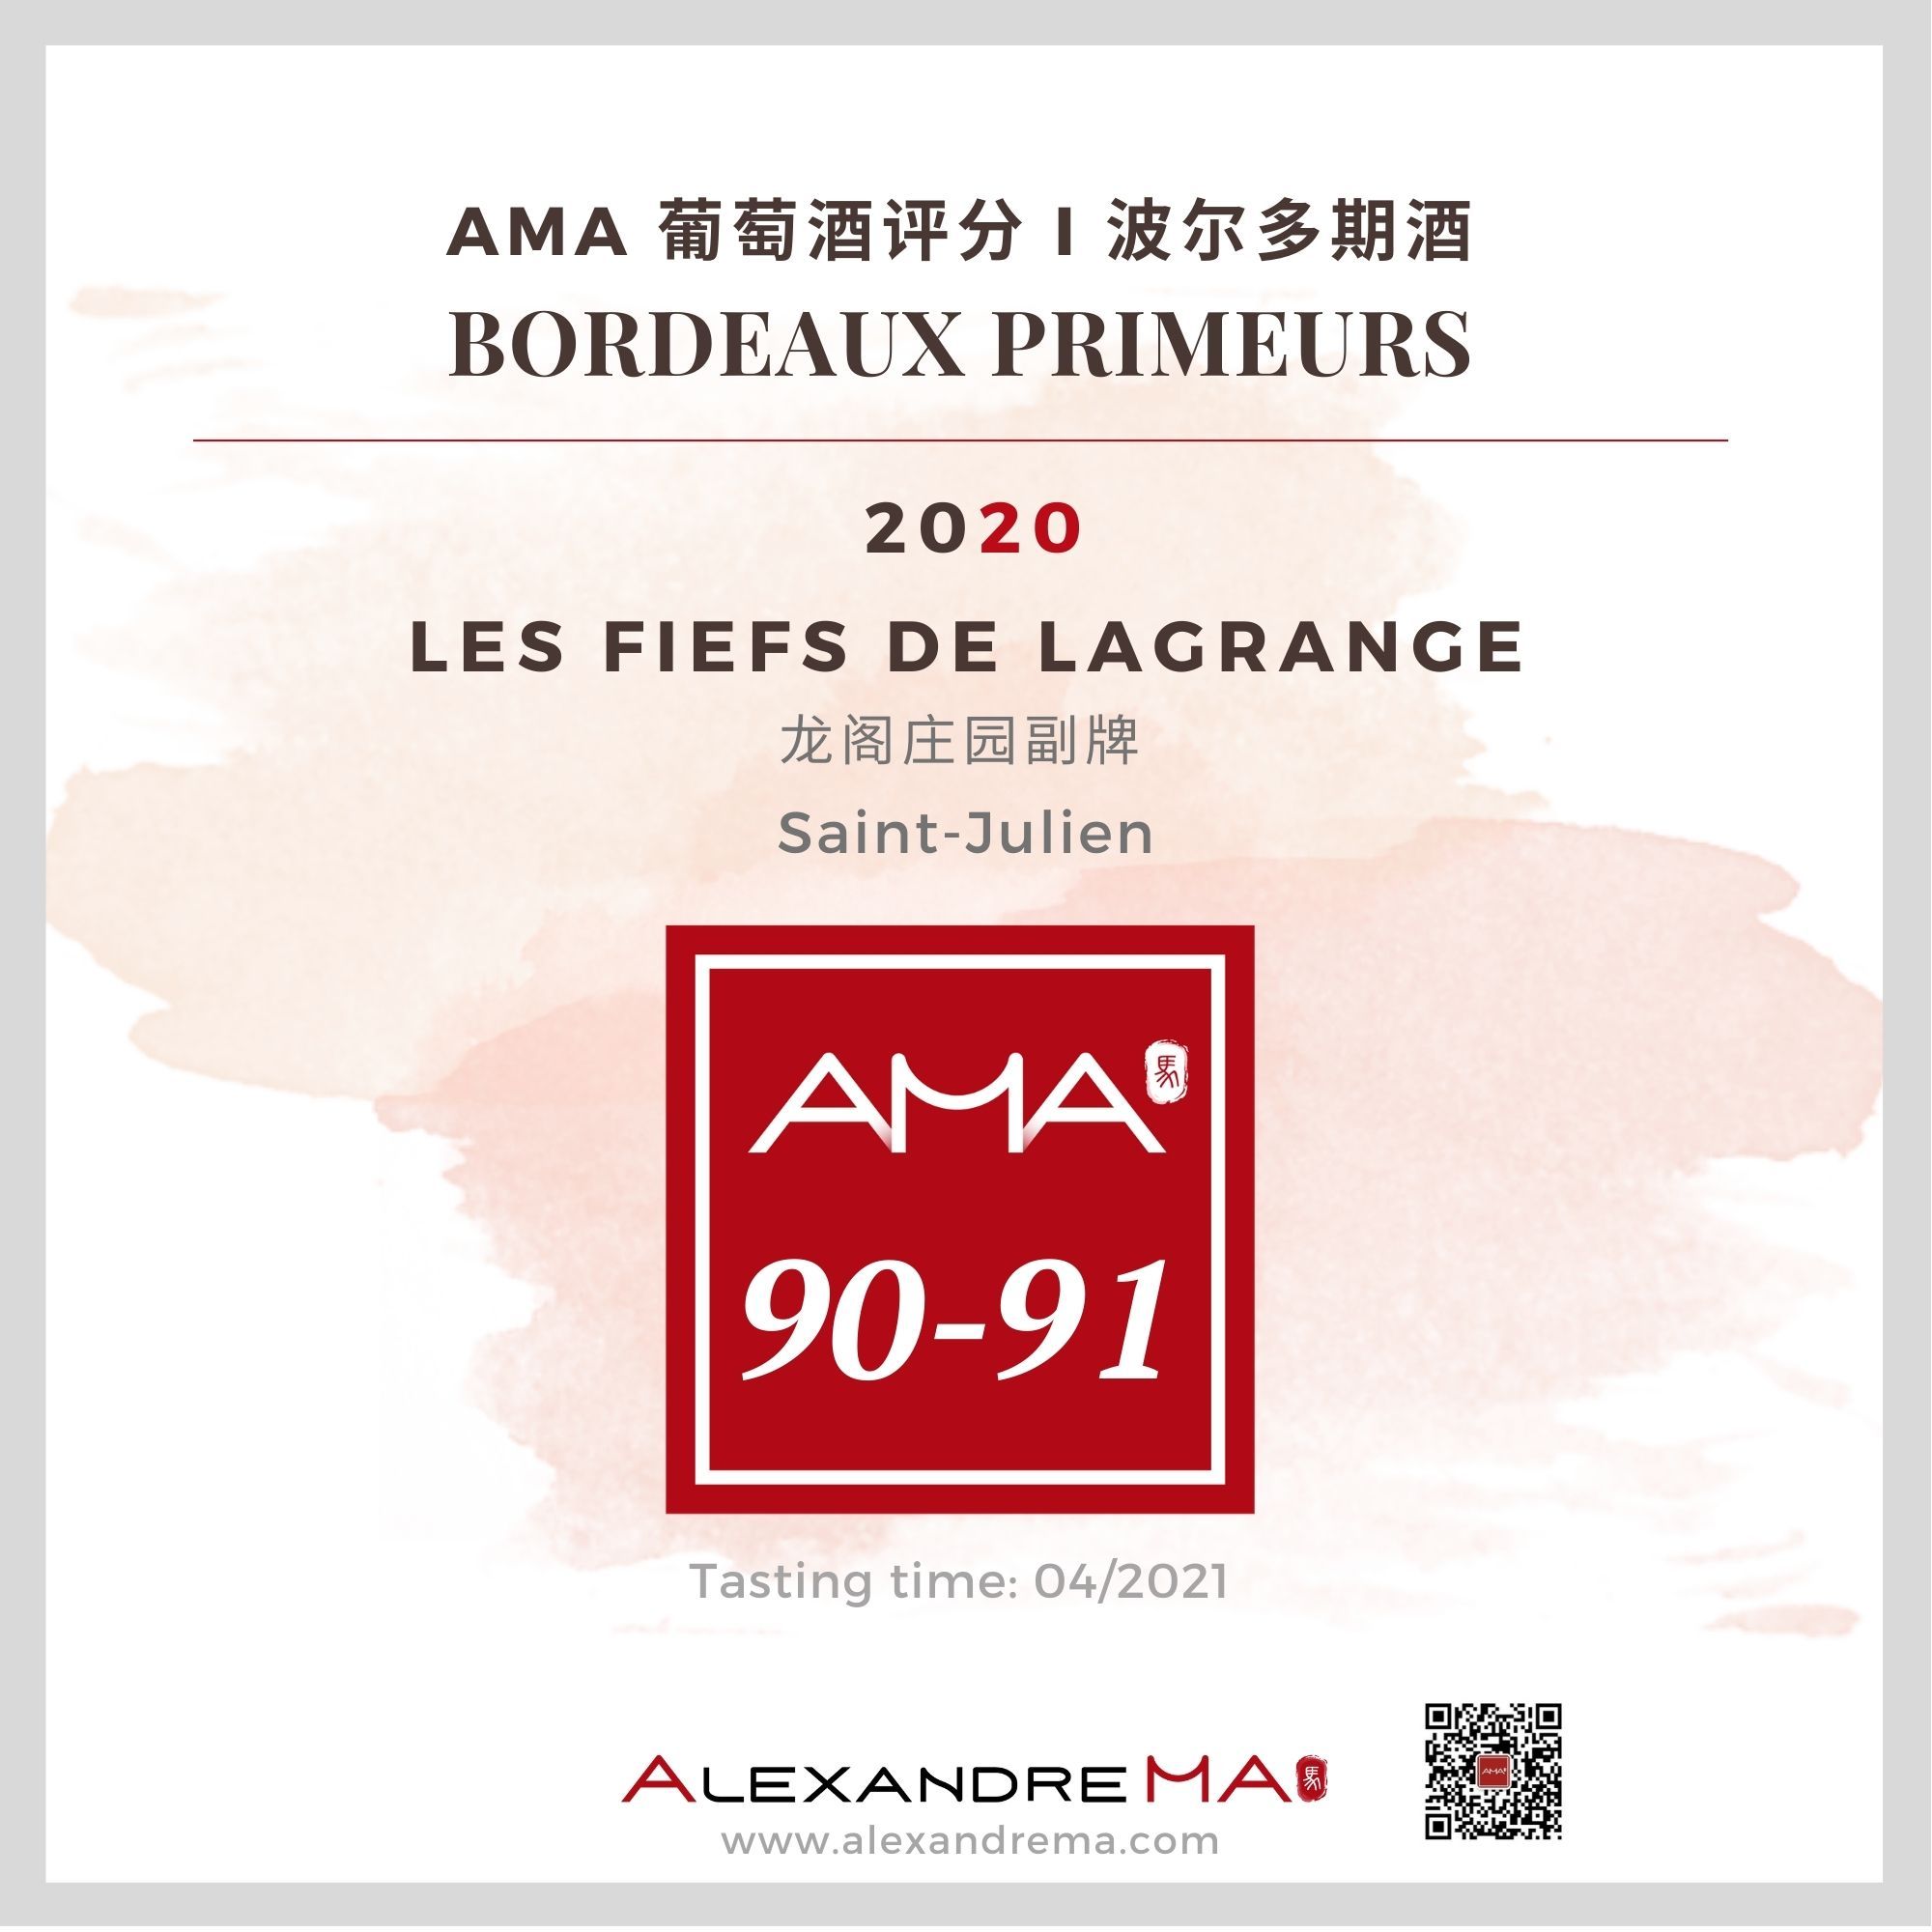 Les Fiefs de Lagrange 2020 龙阁庄园复牌 - Alexandre Ma